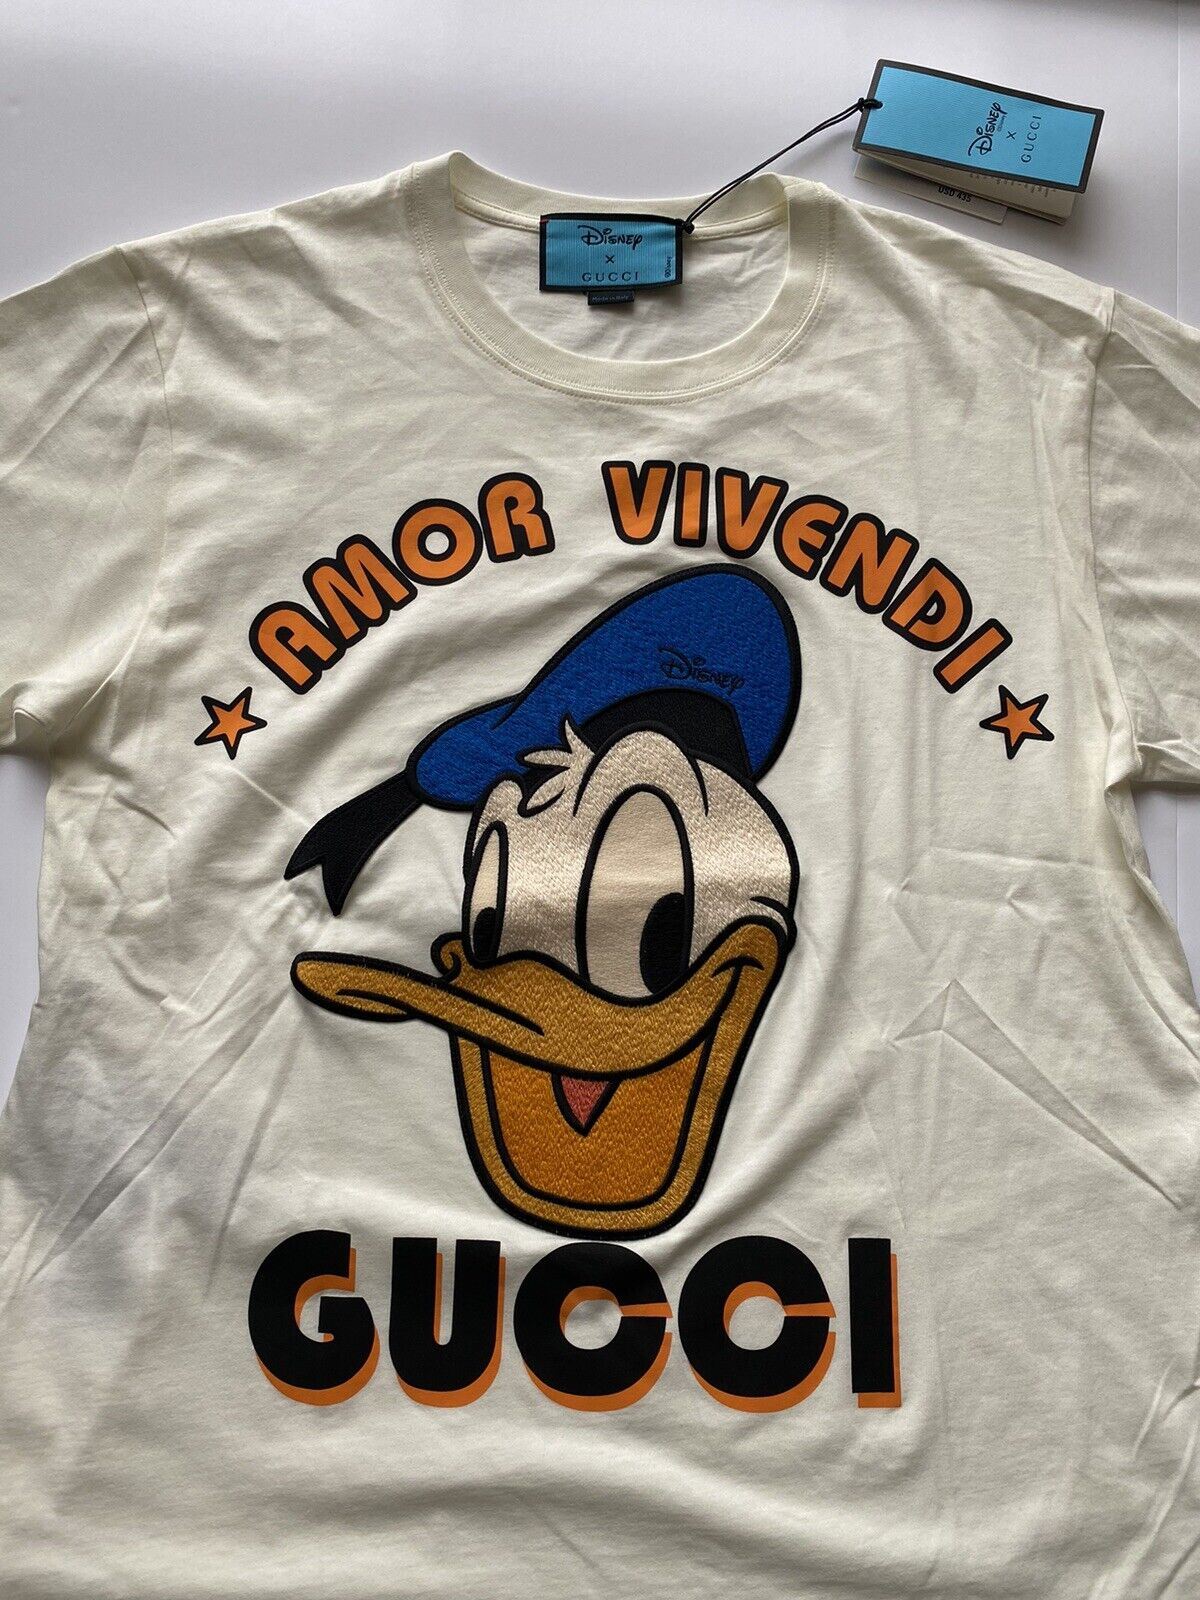 NWT Gucci Donald Duck Amor Vivendi Ivory Jersey T-Shirt XS (Oversized) 615044